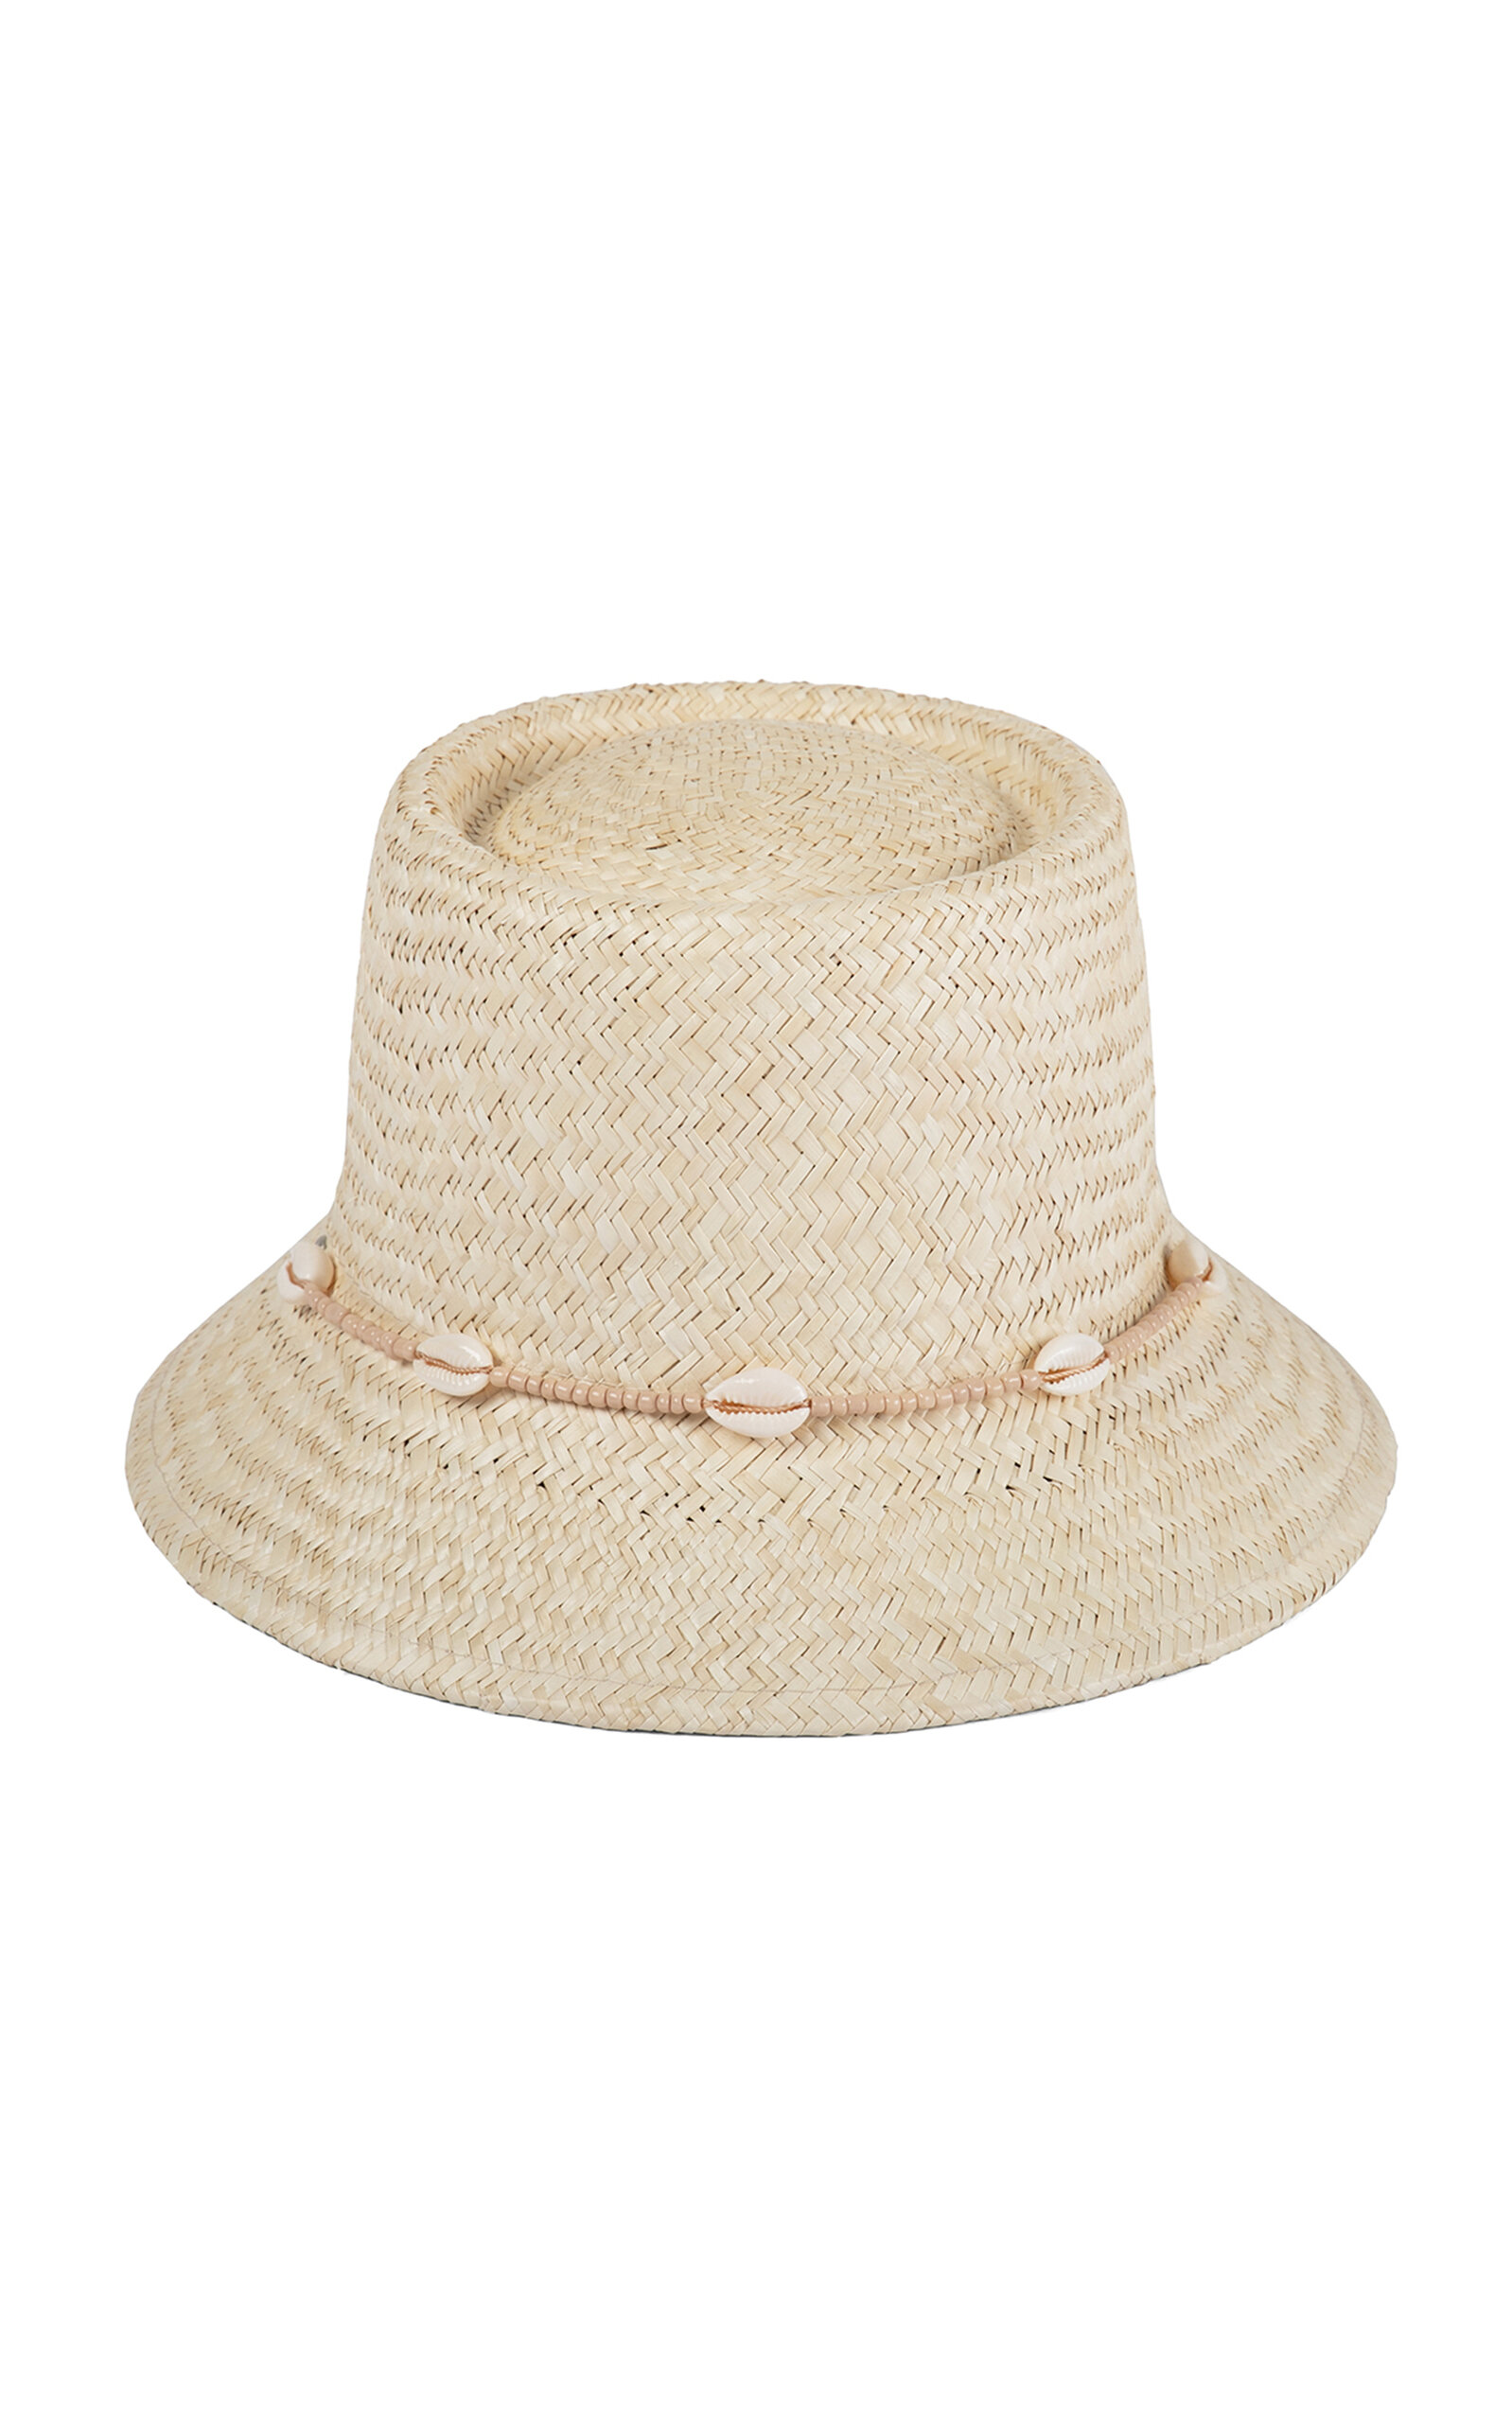 The Inca Shell-Embellished Raffia Bucket Hat